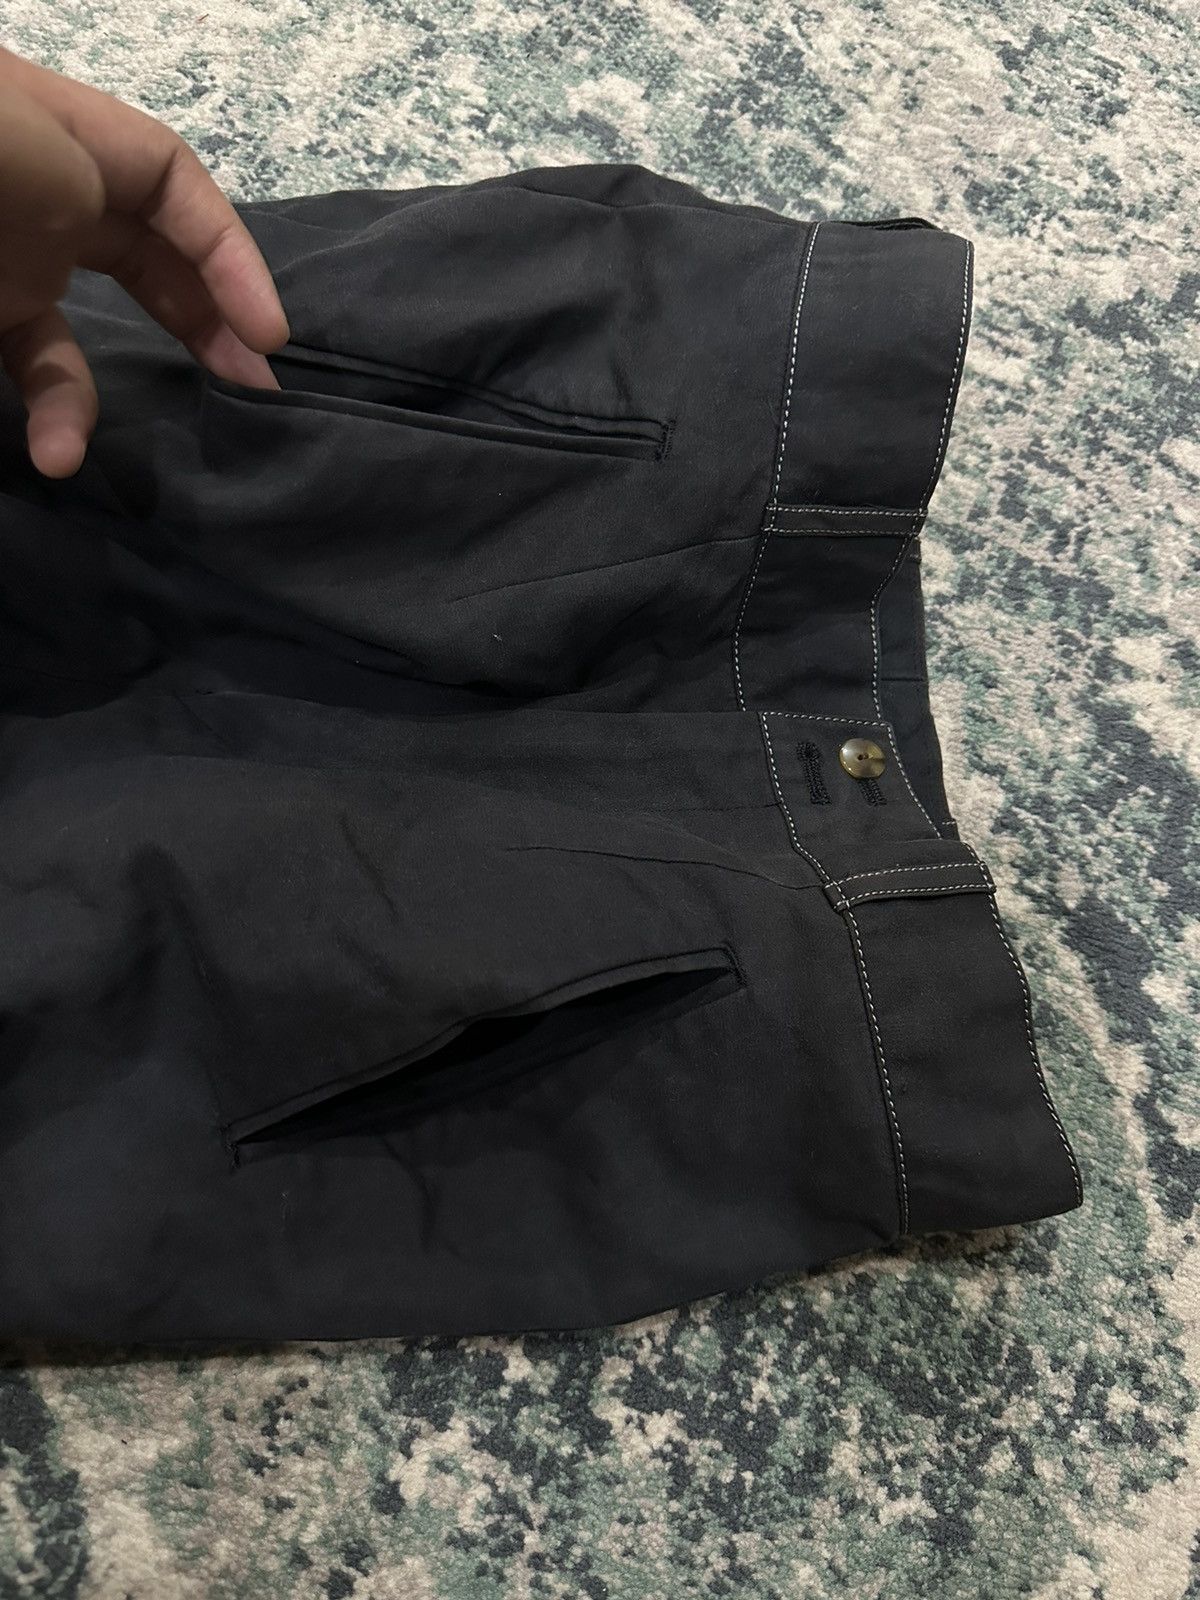 Jean Paul Gaultier Trousers Black Faded Pant - 7